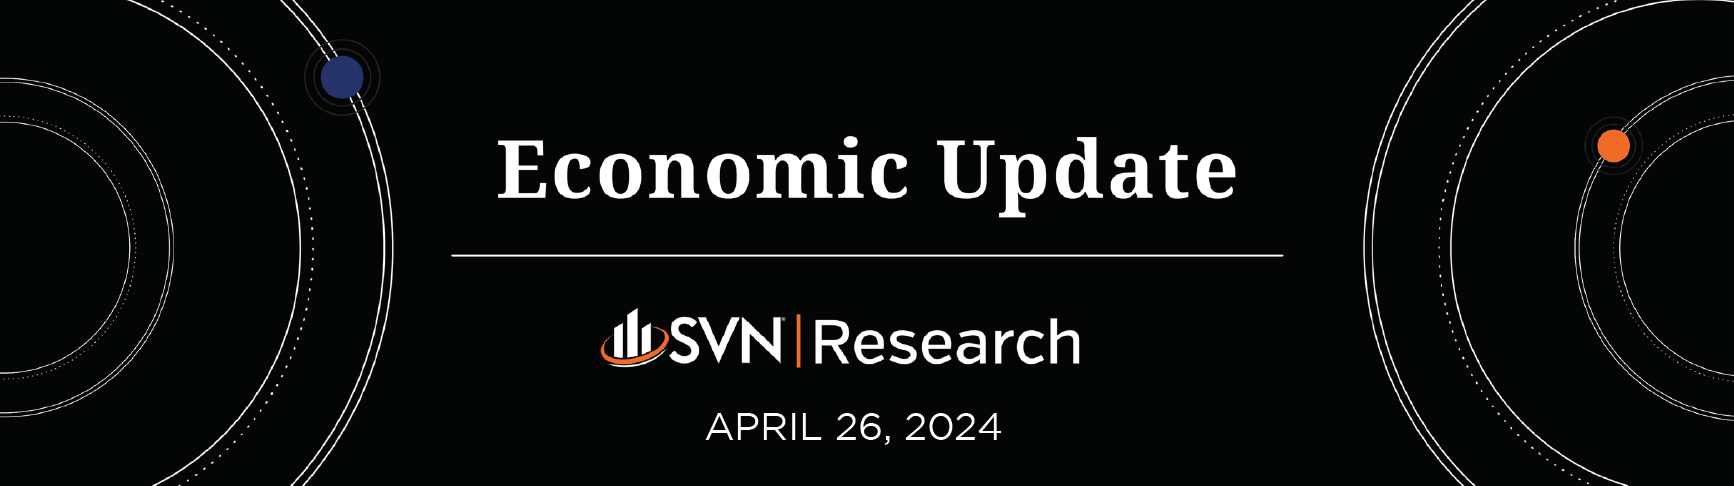 SVN | Research Economic Update 4.26.2024